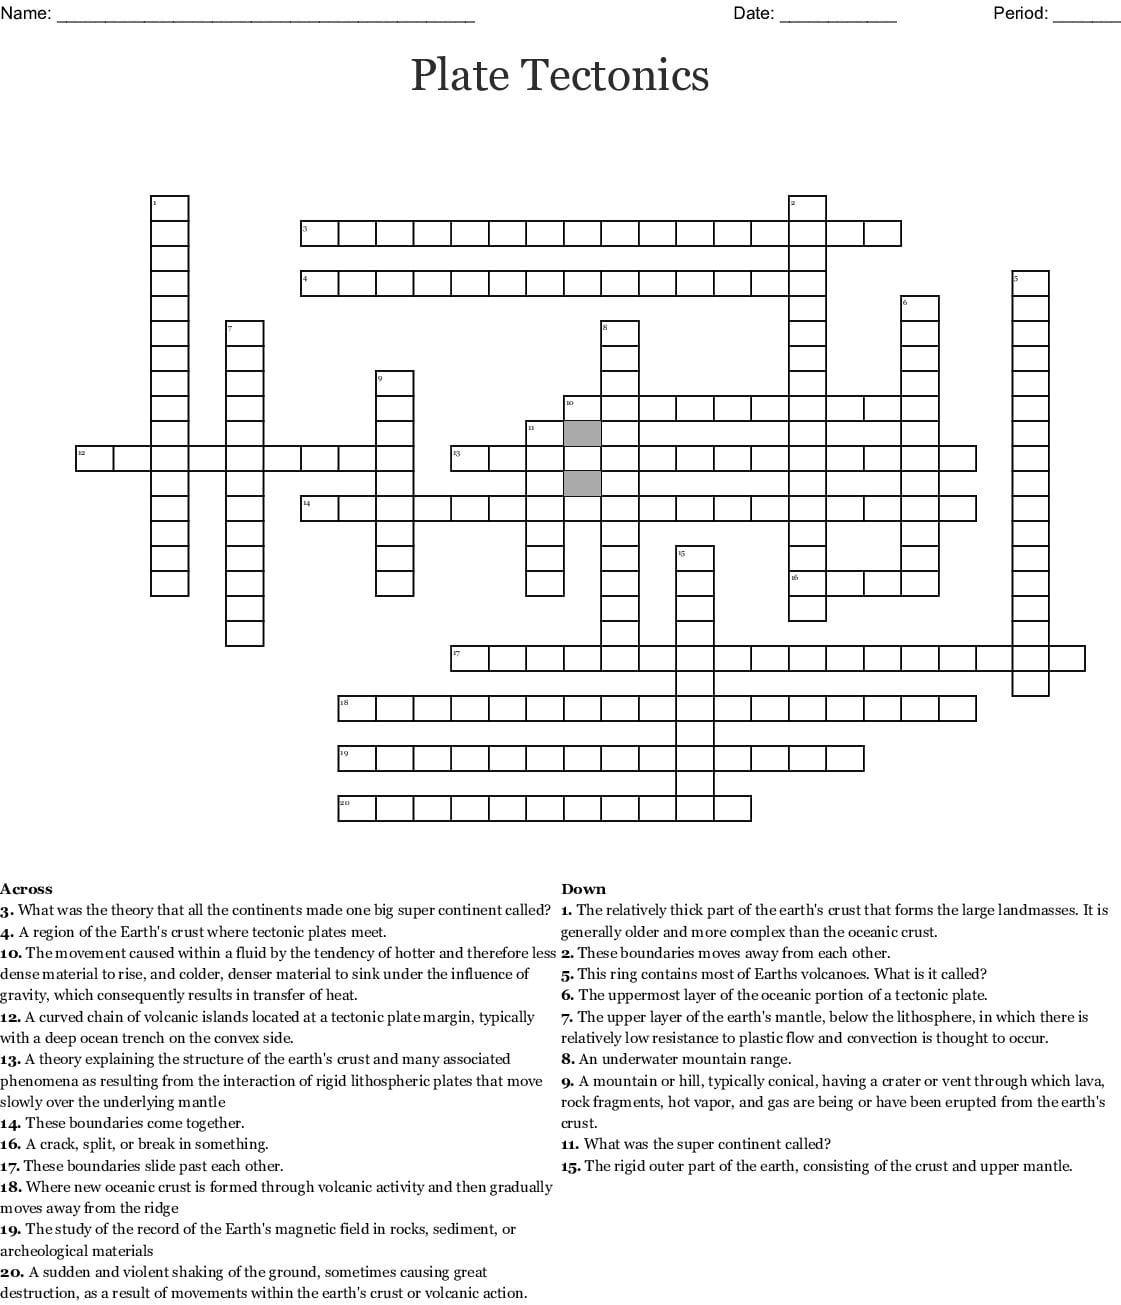 Printable Plate Tectonics Crossword Puzzle